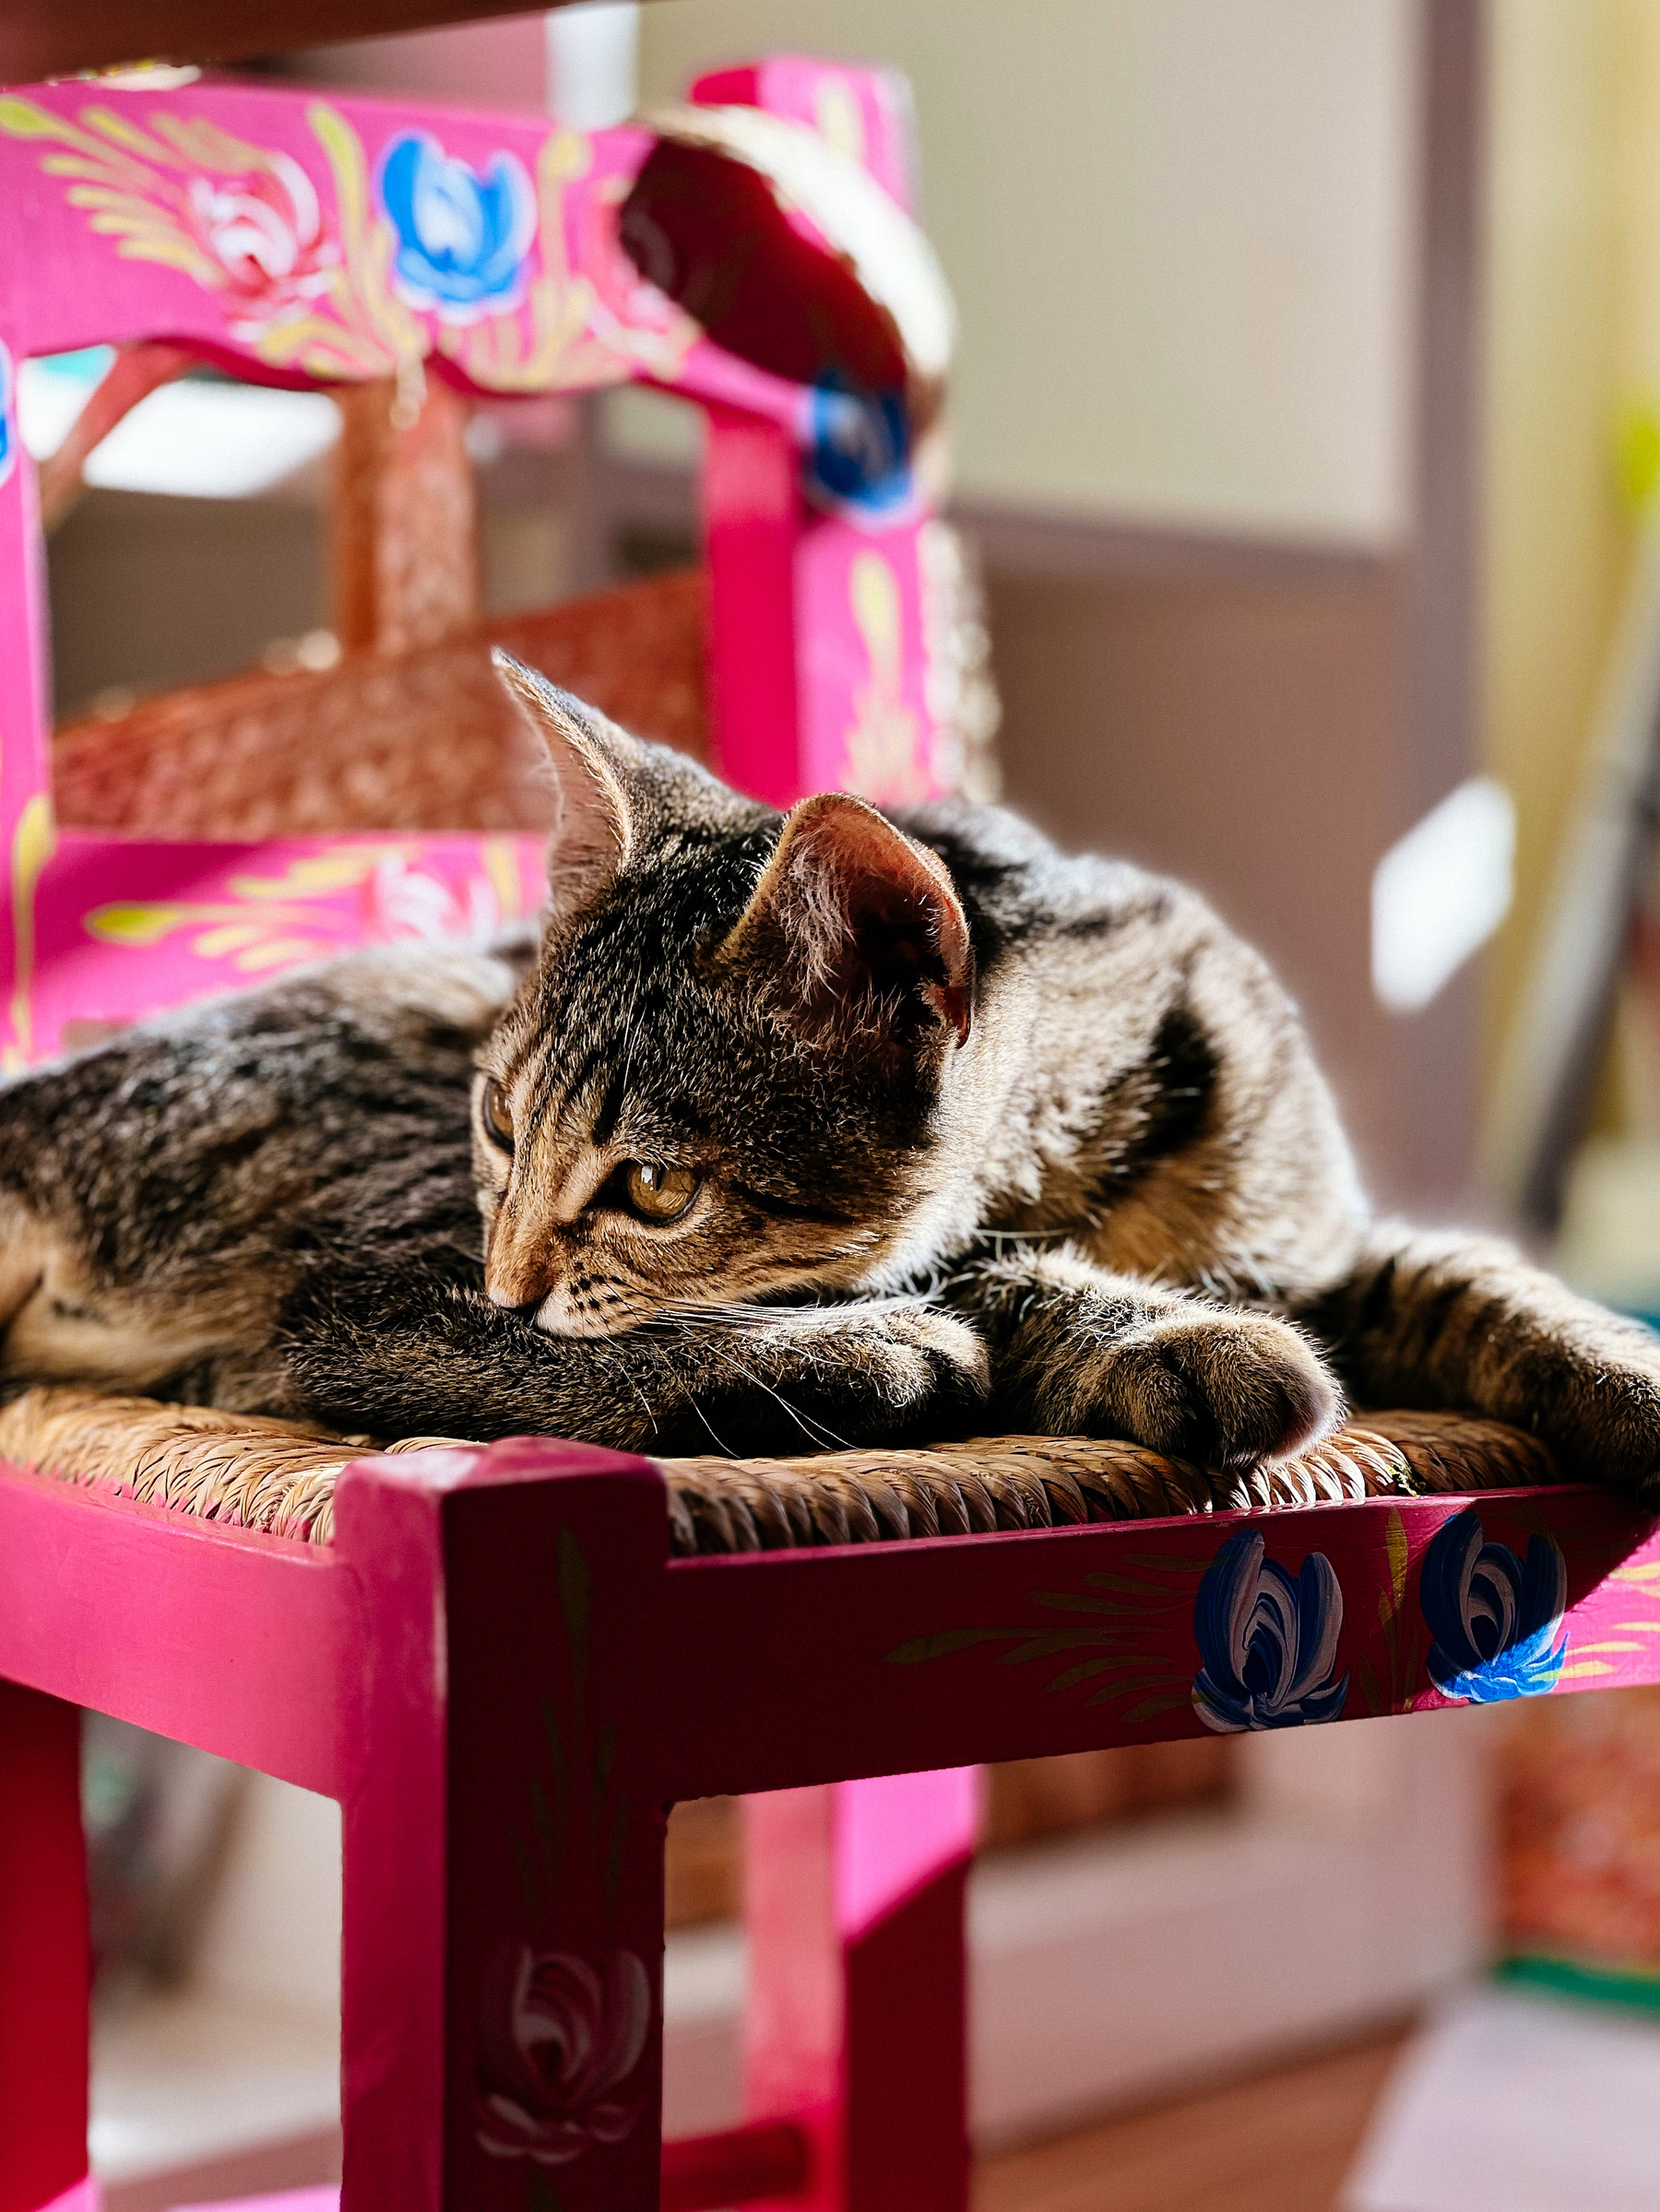 Kitten on a pink chair